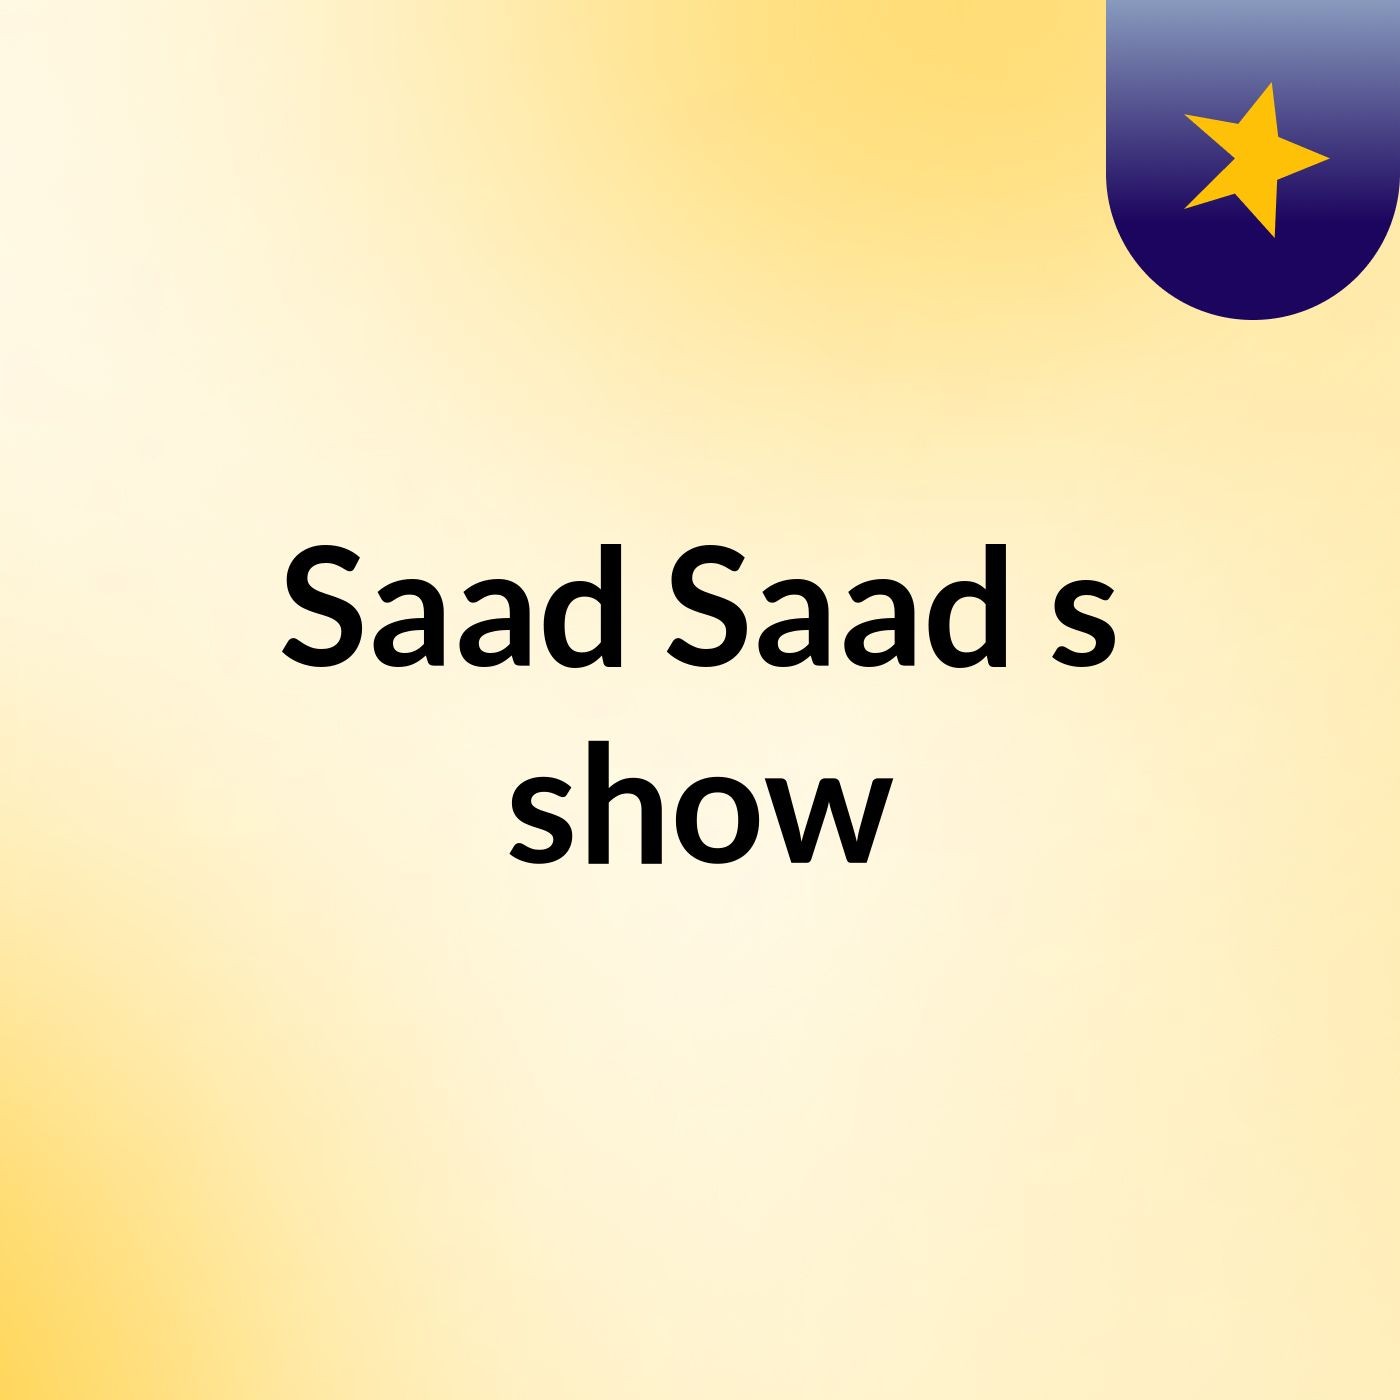 Saad Saad's show